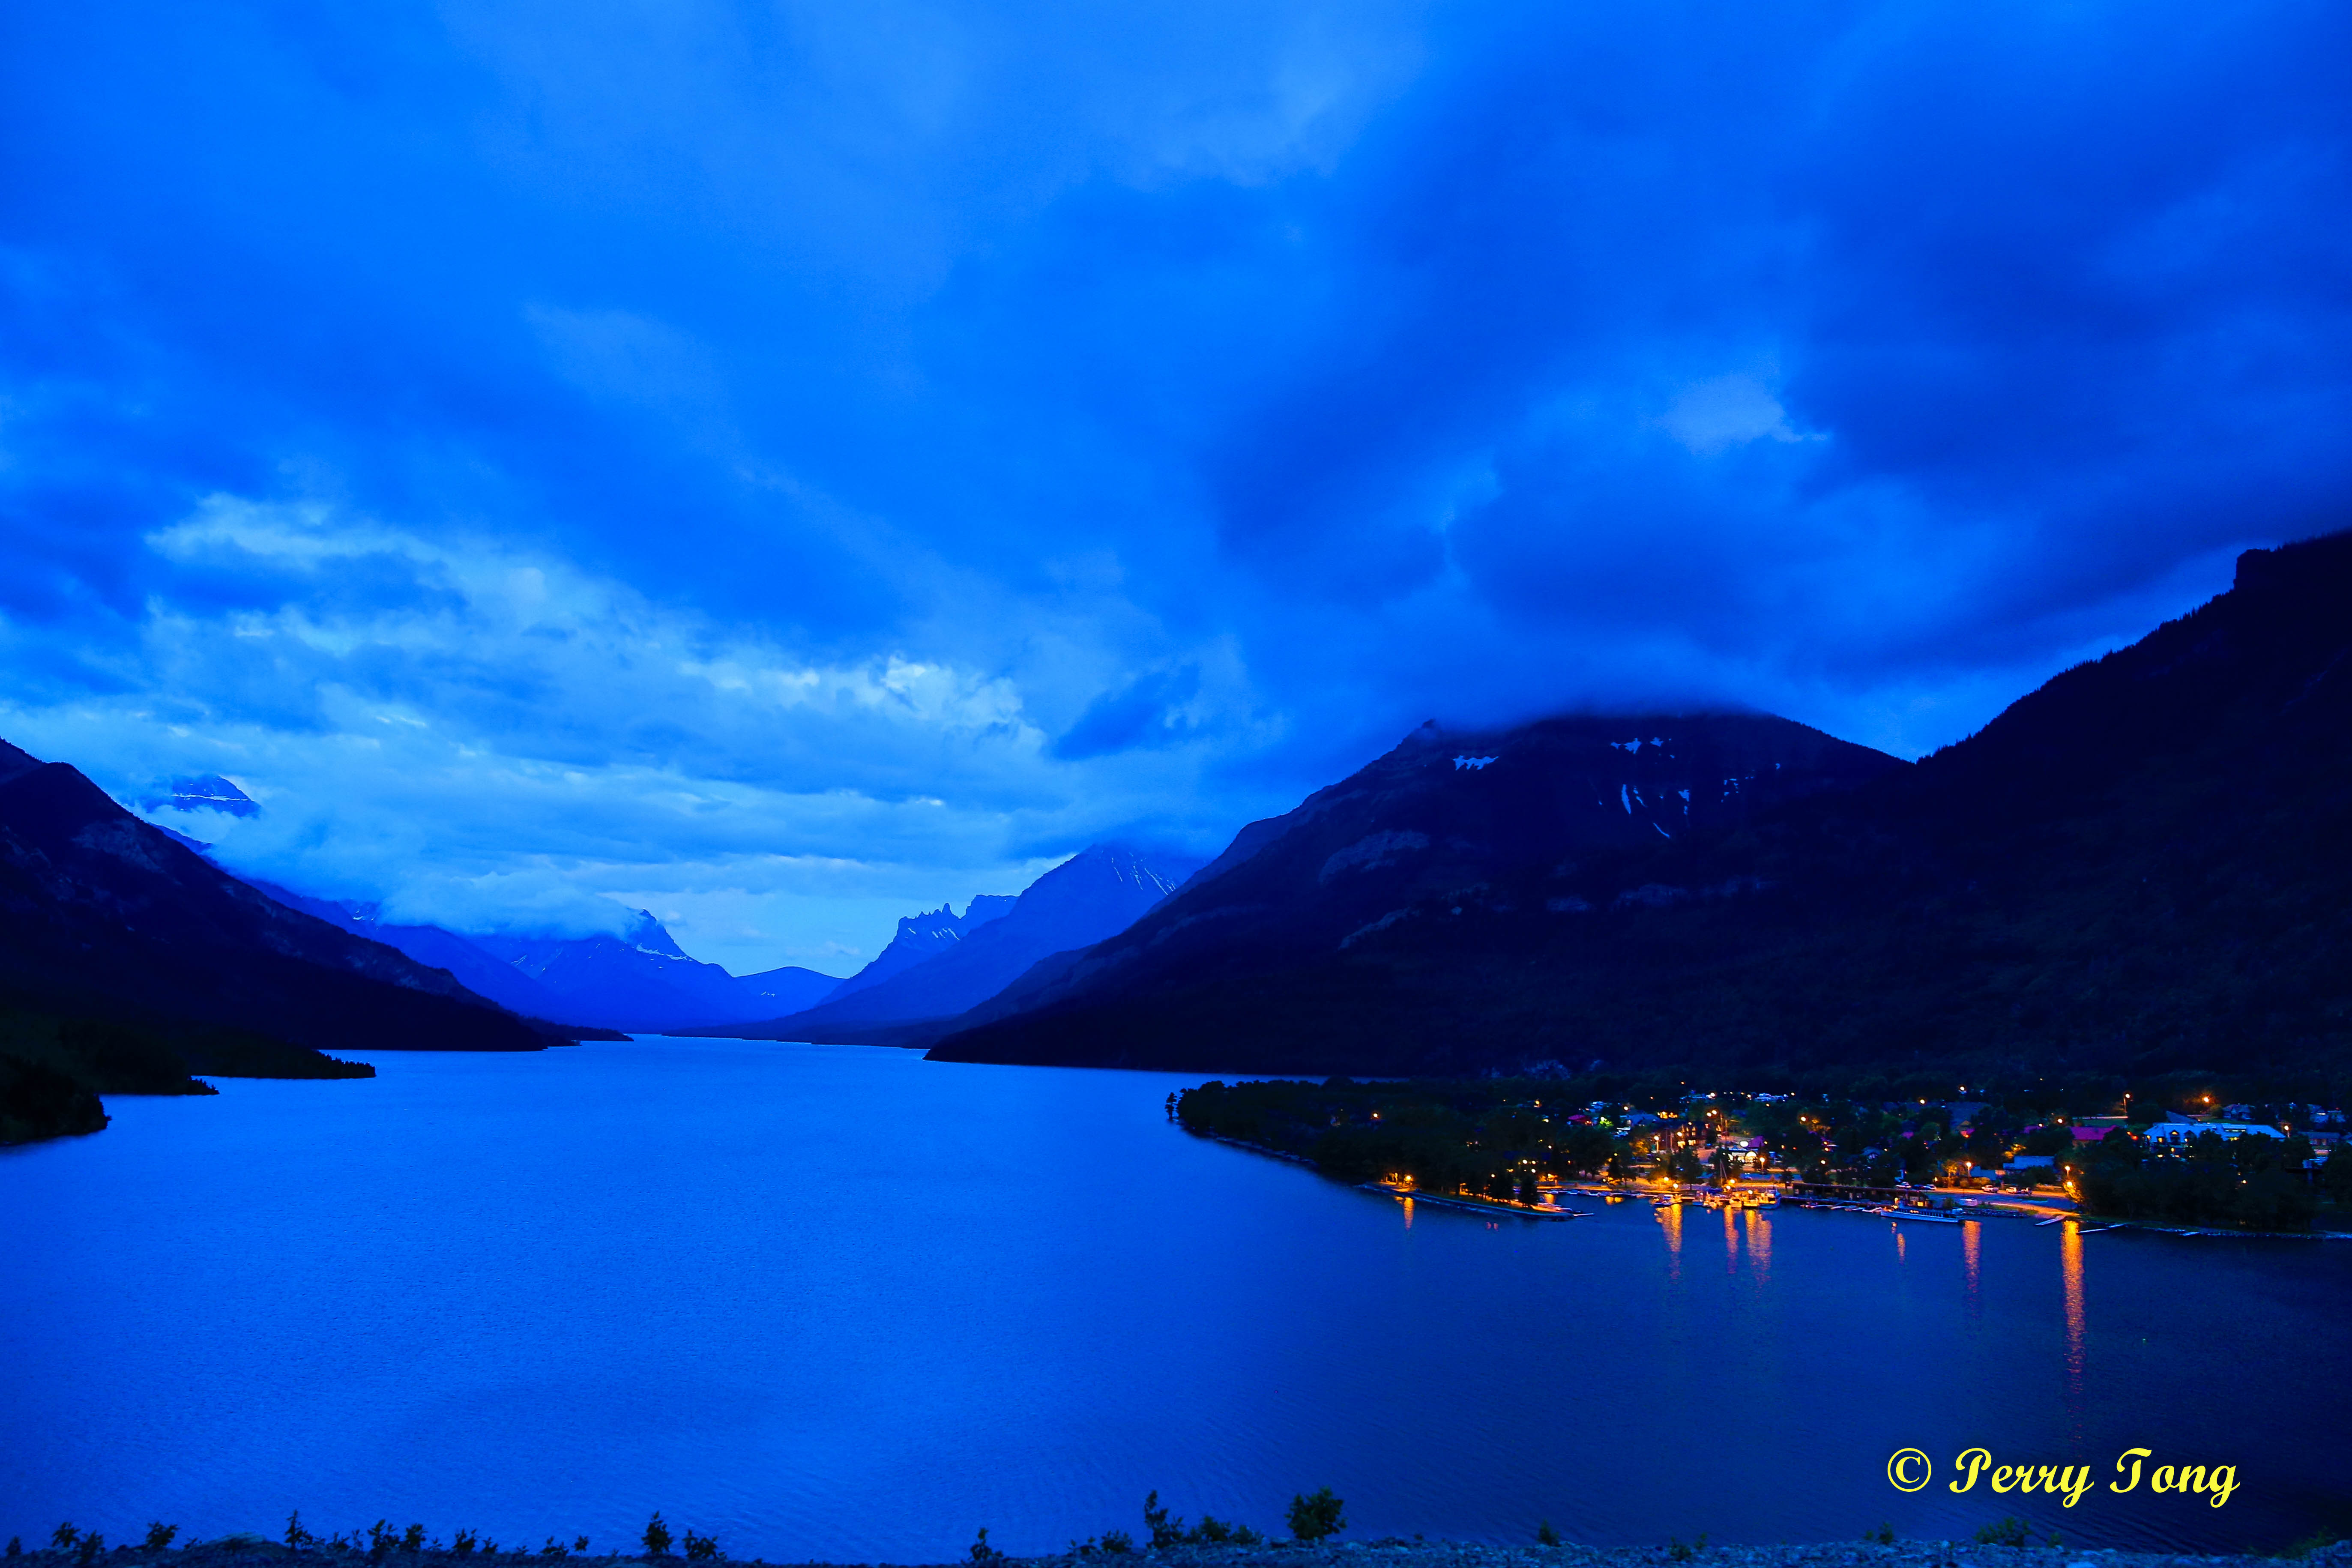 Dawn color Waterton Lake, Canada 06 2015  4萬丈红泉落, 暮色顯蒼茫.jpg  by WPC-162